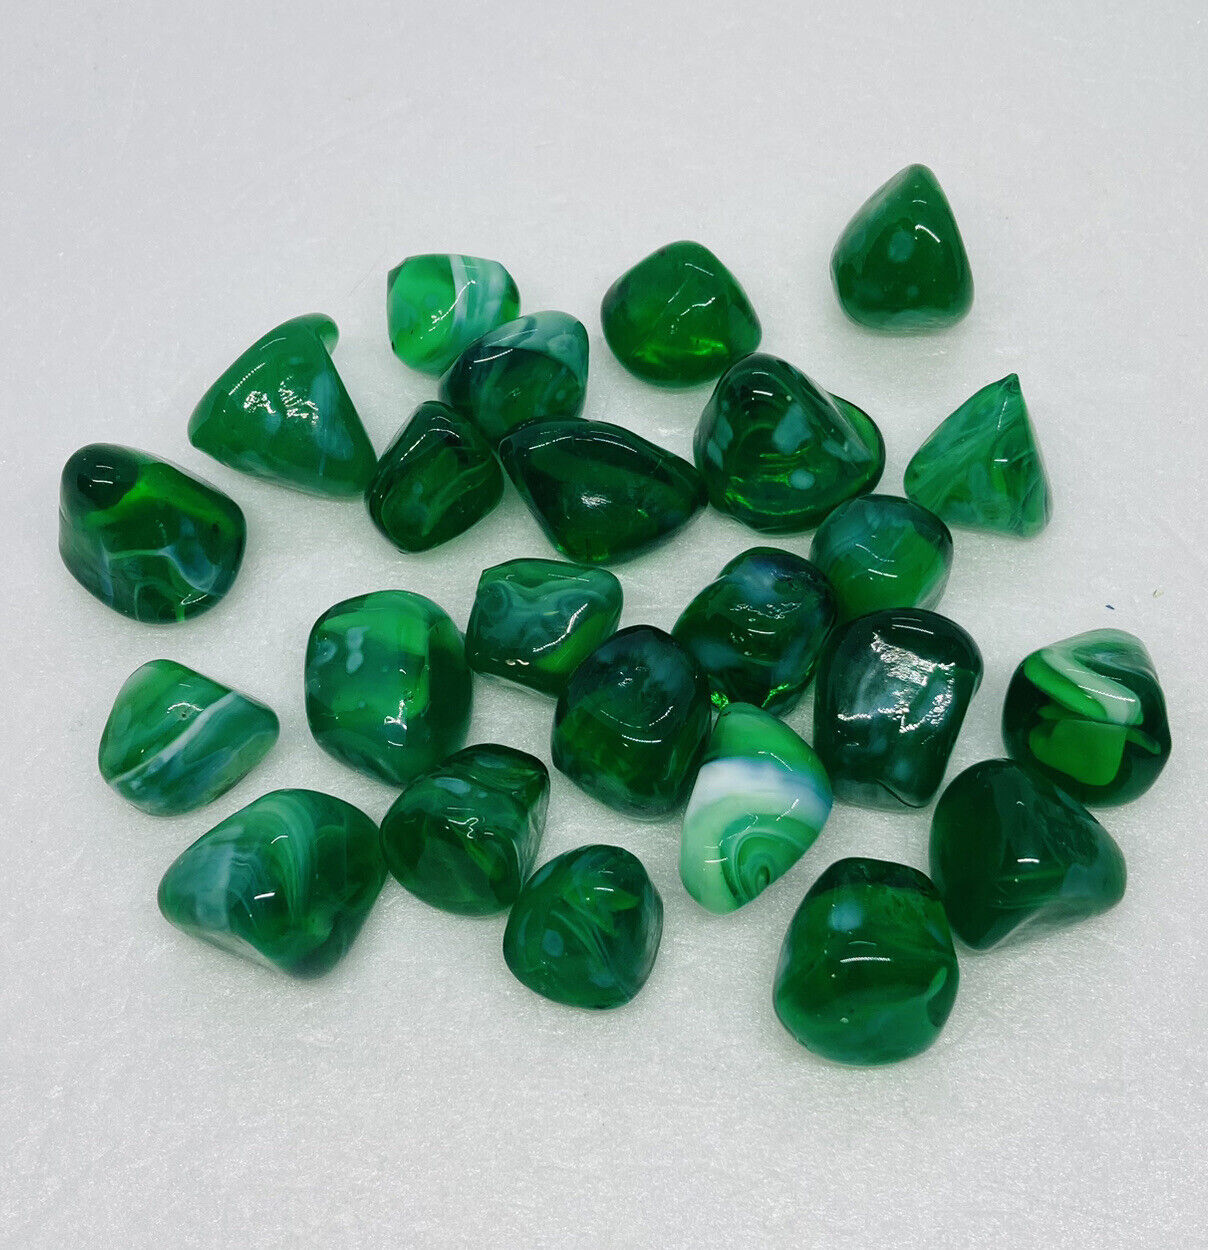 Vintage Emerald Green Tumble Malachite Rock Stones Lot of 24 Various Shaped 25